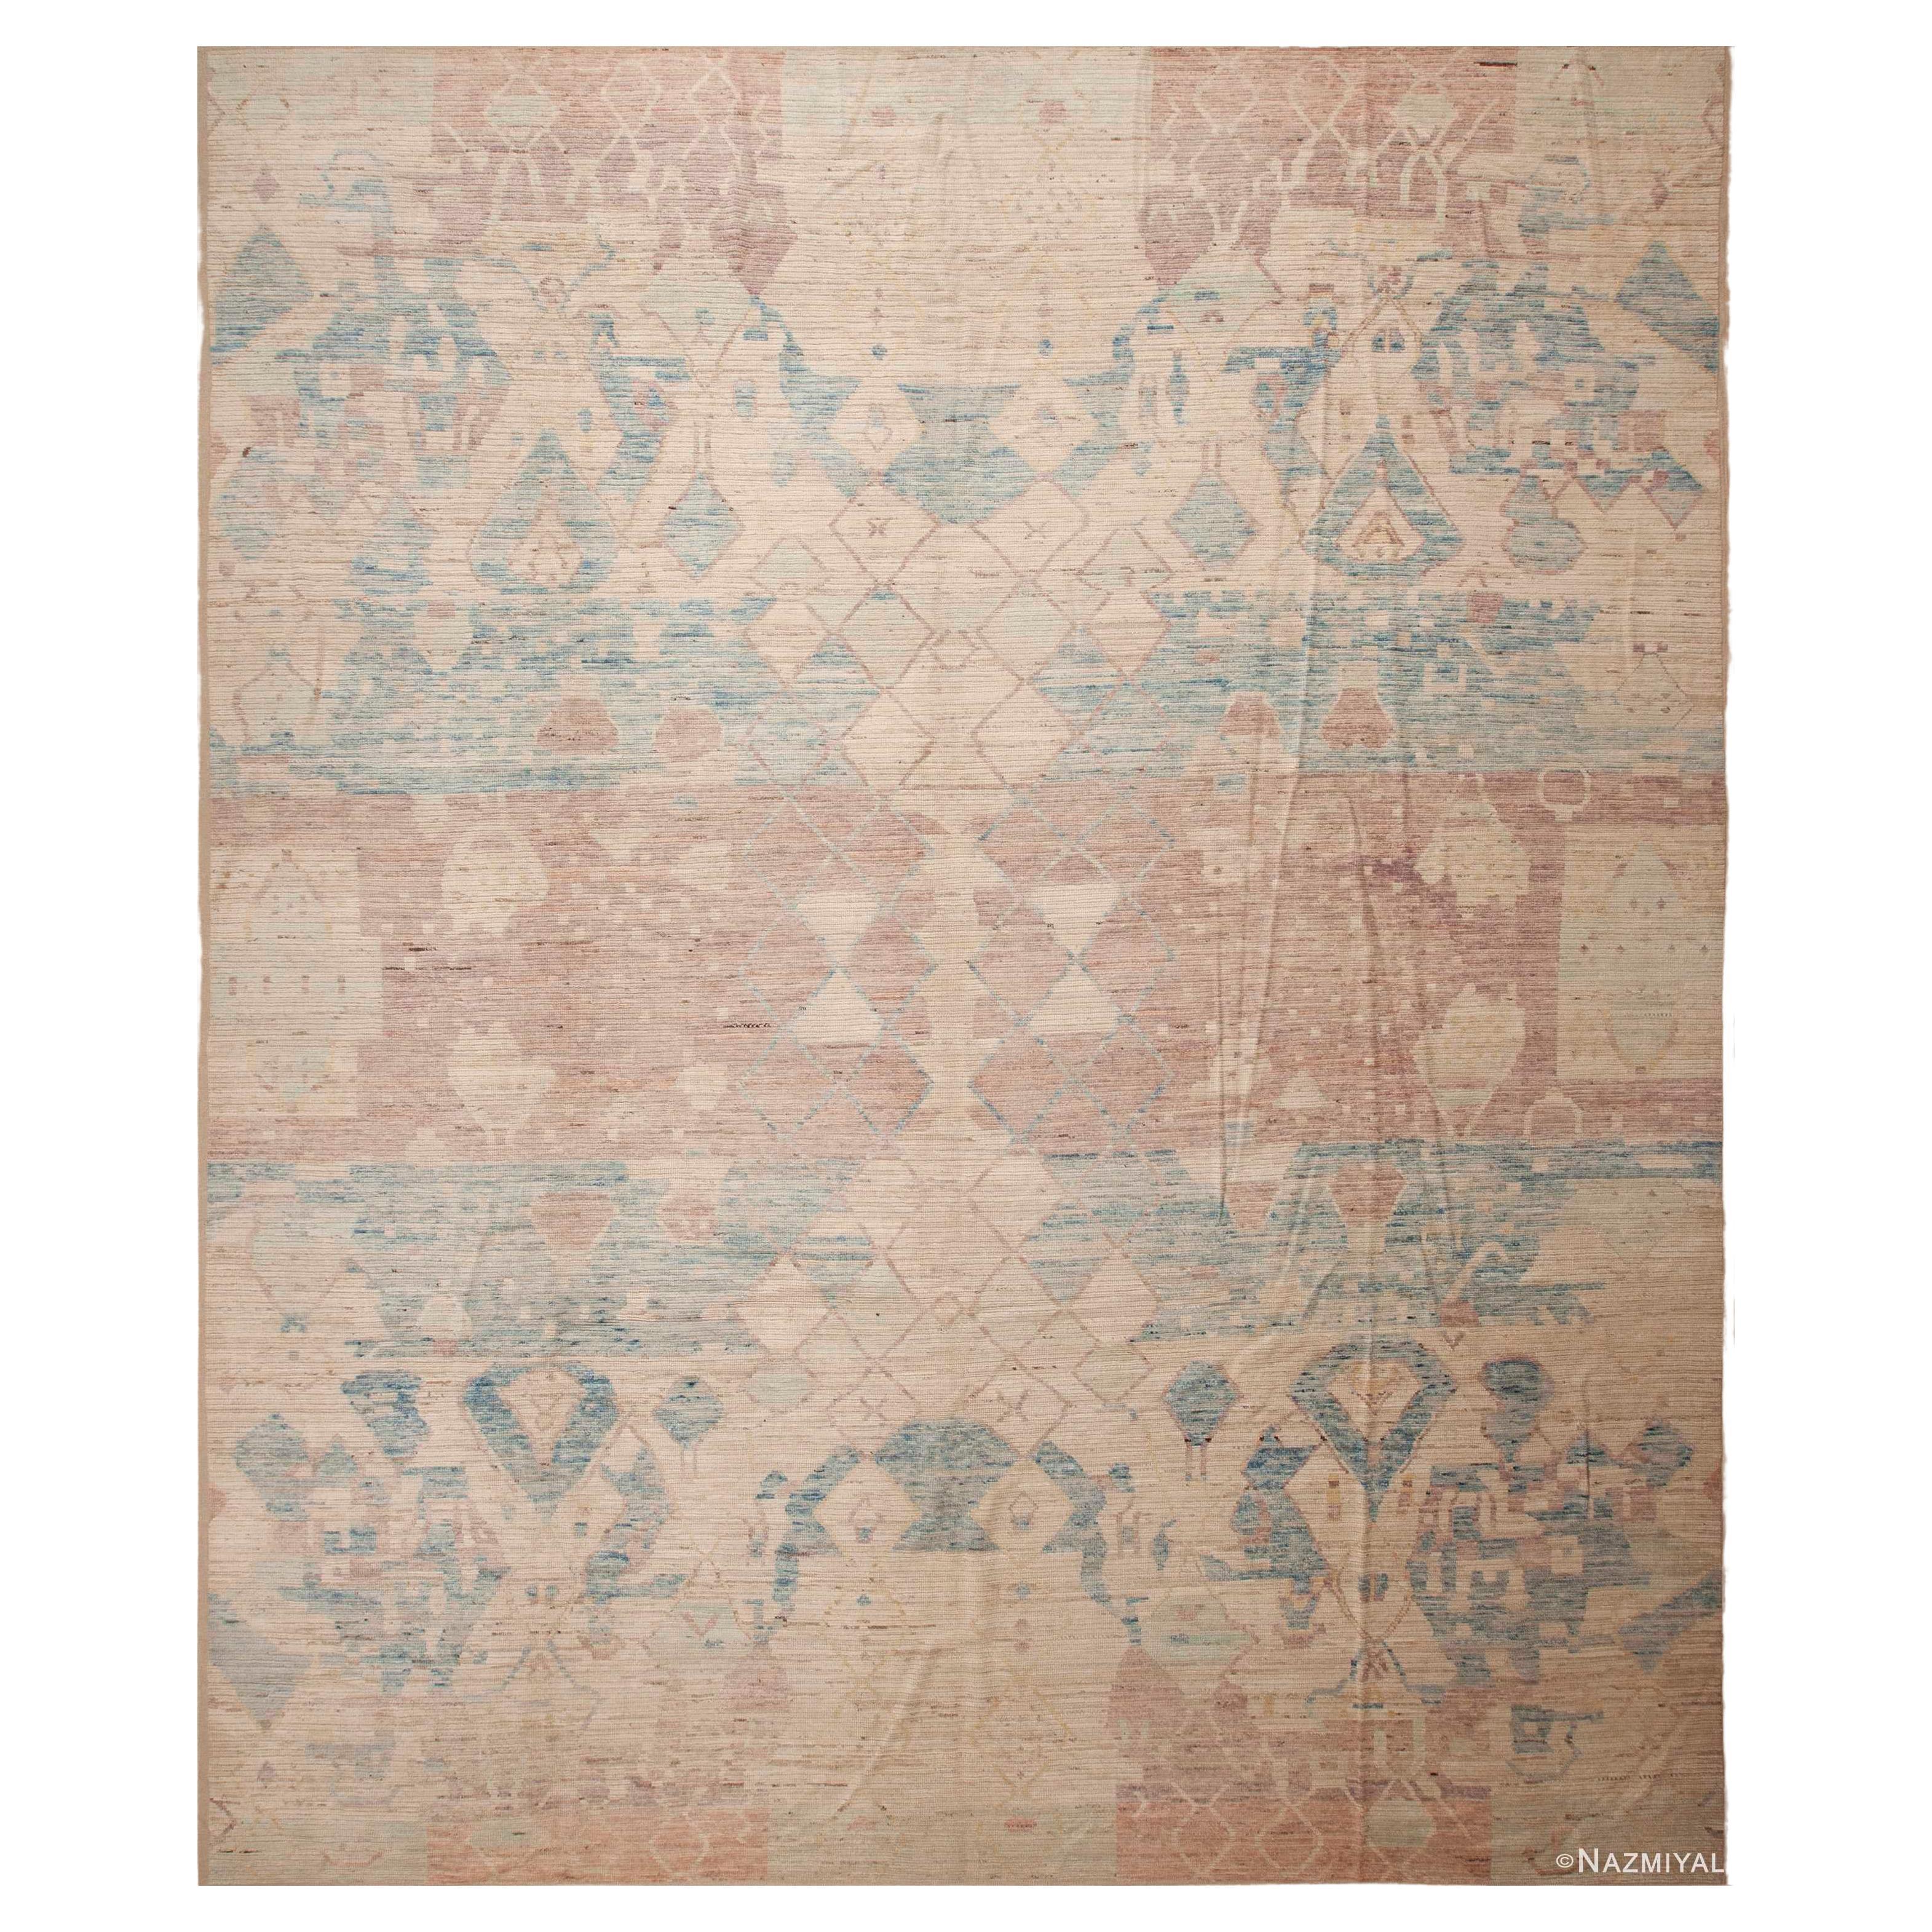 Tapis abrash moderne, décoratif et tribal, collection Nazmiyal, 13'10" x 16'6"